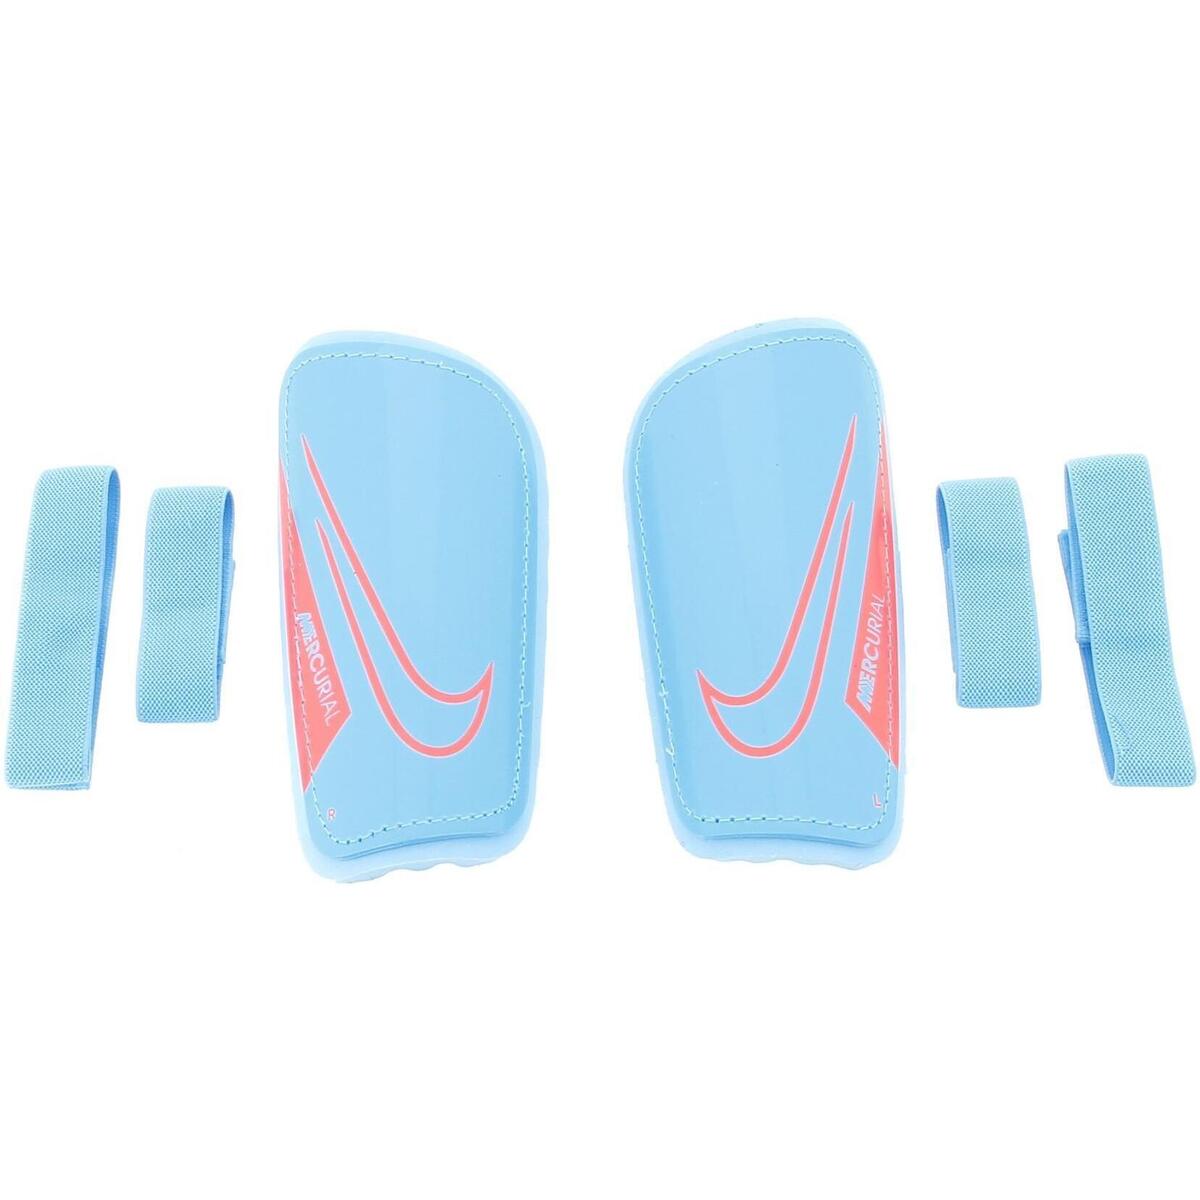 Accessoires Accessoires sport Nike Nk merc hardshell - fa22 Bleu